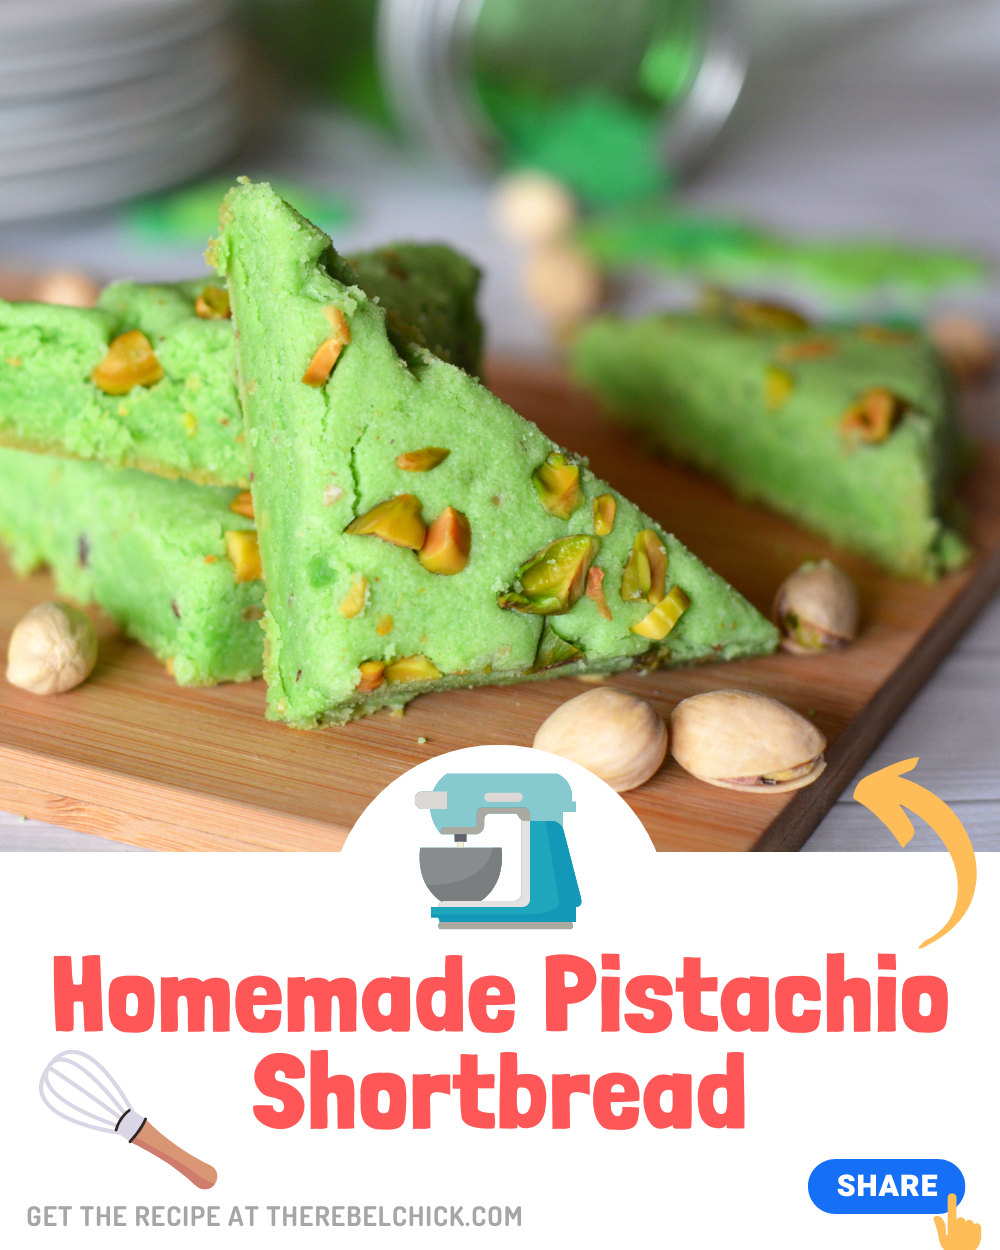 https://therebelchick.com/wp-content/uploads/2016/02/Homemade-Pistachio-Shortbread-Recipe-2.png